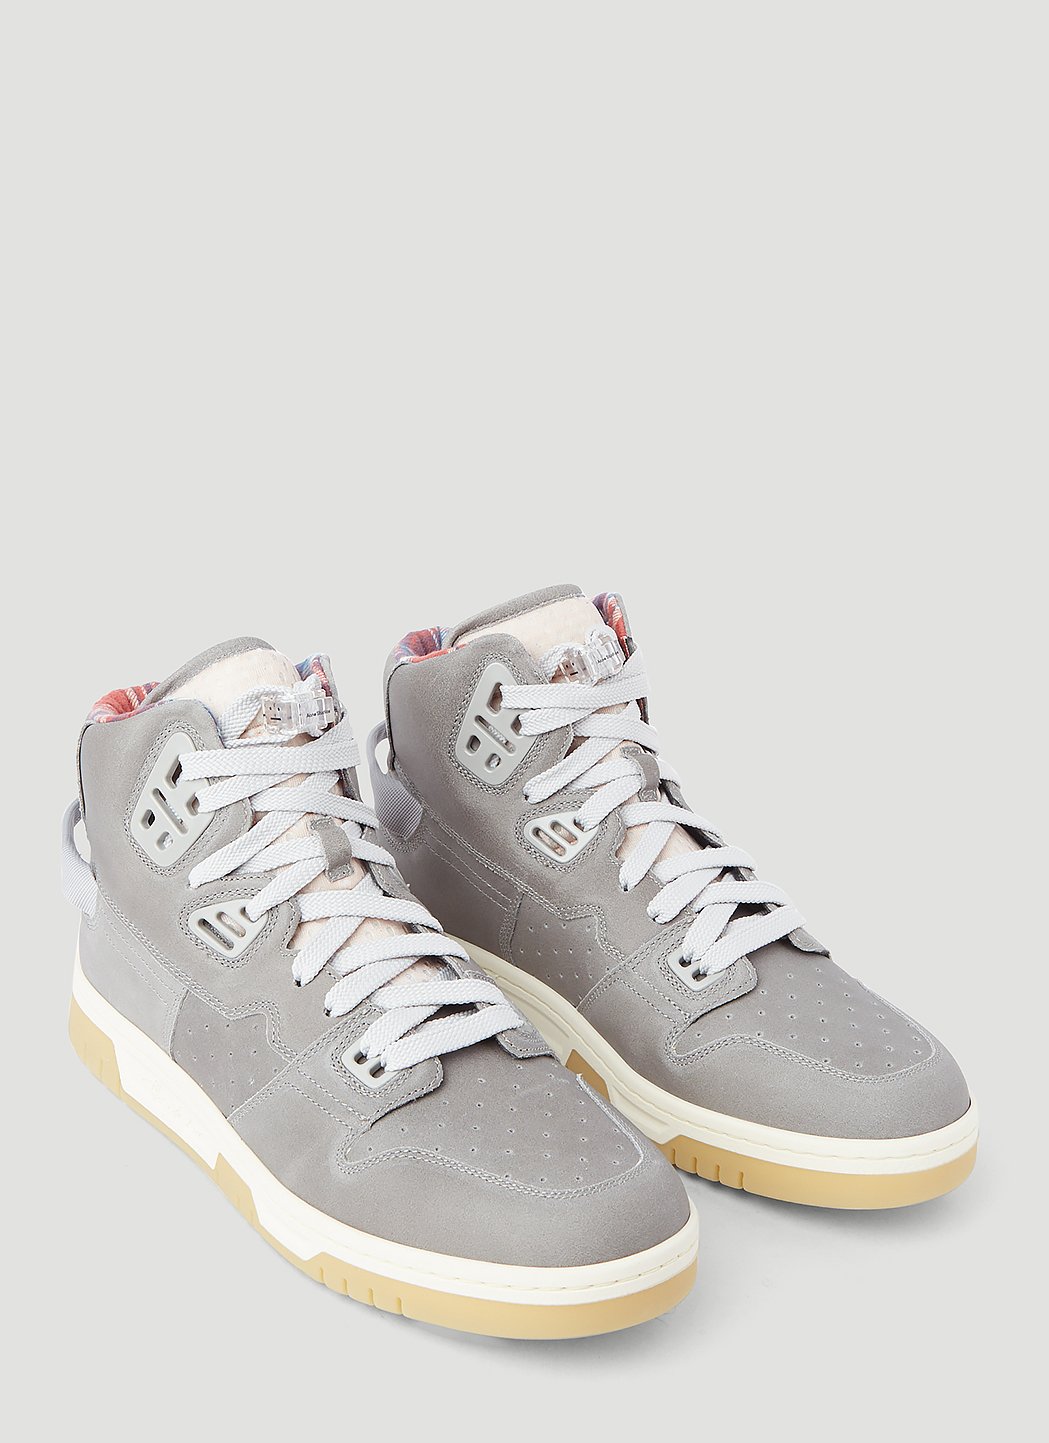 Acne Studios Men's High-Top Sneakers in Grey | LN-CC